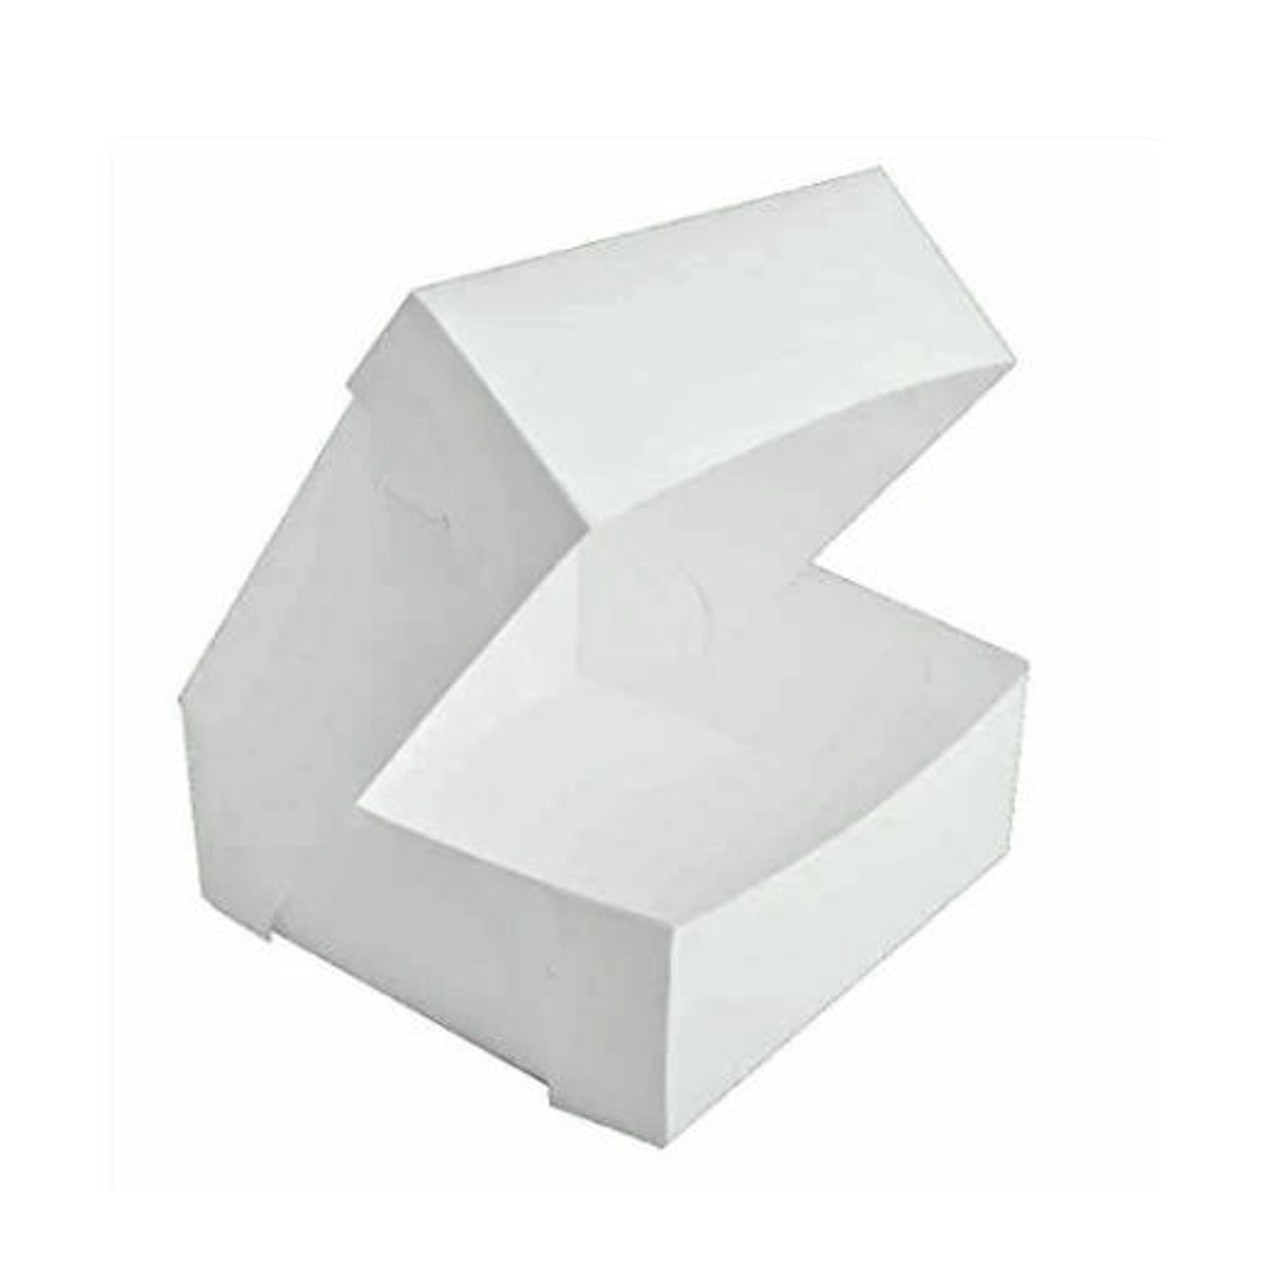 Pack x 25 8"x 8"x 4" ( 200 x 200 x 100mm ) white 1 piece Cake boxes